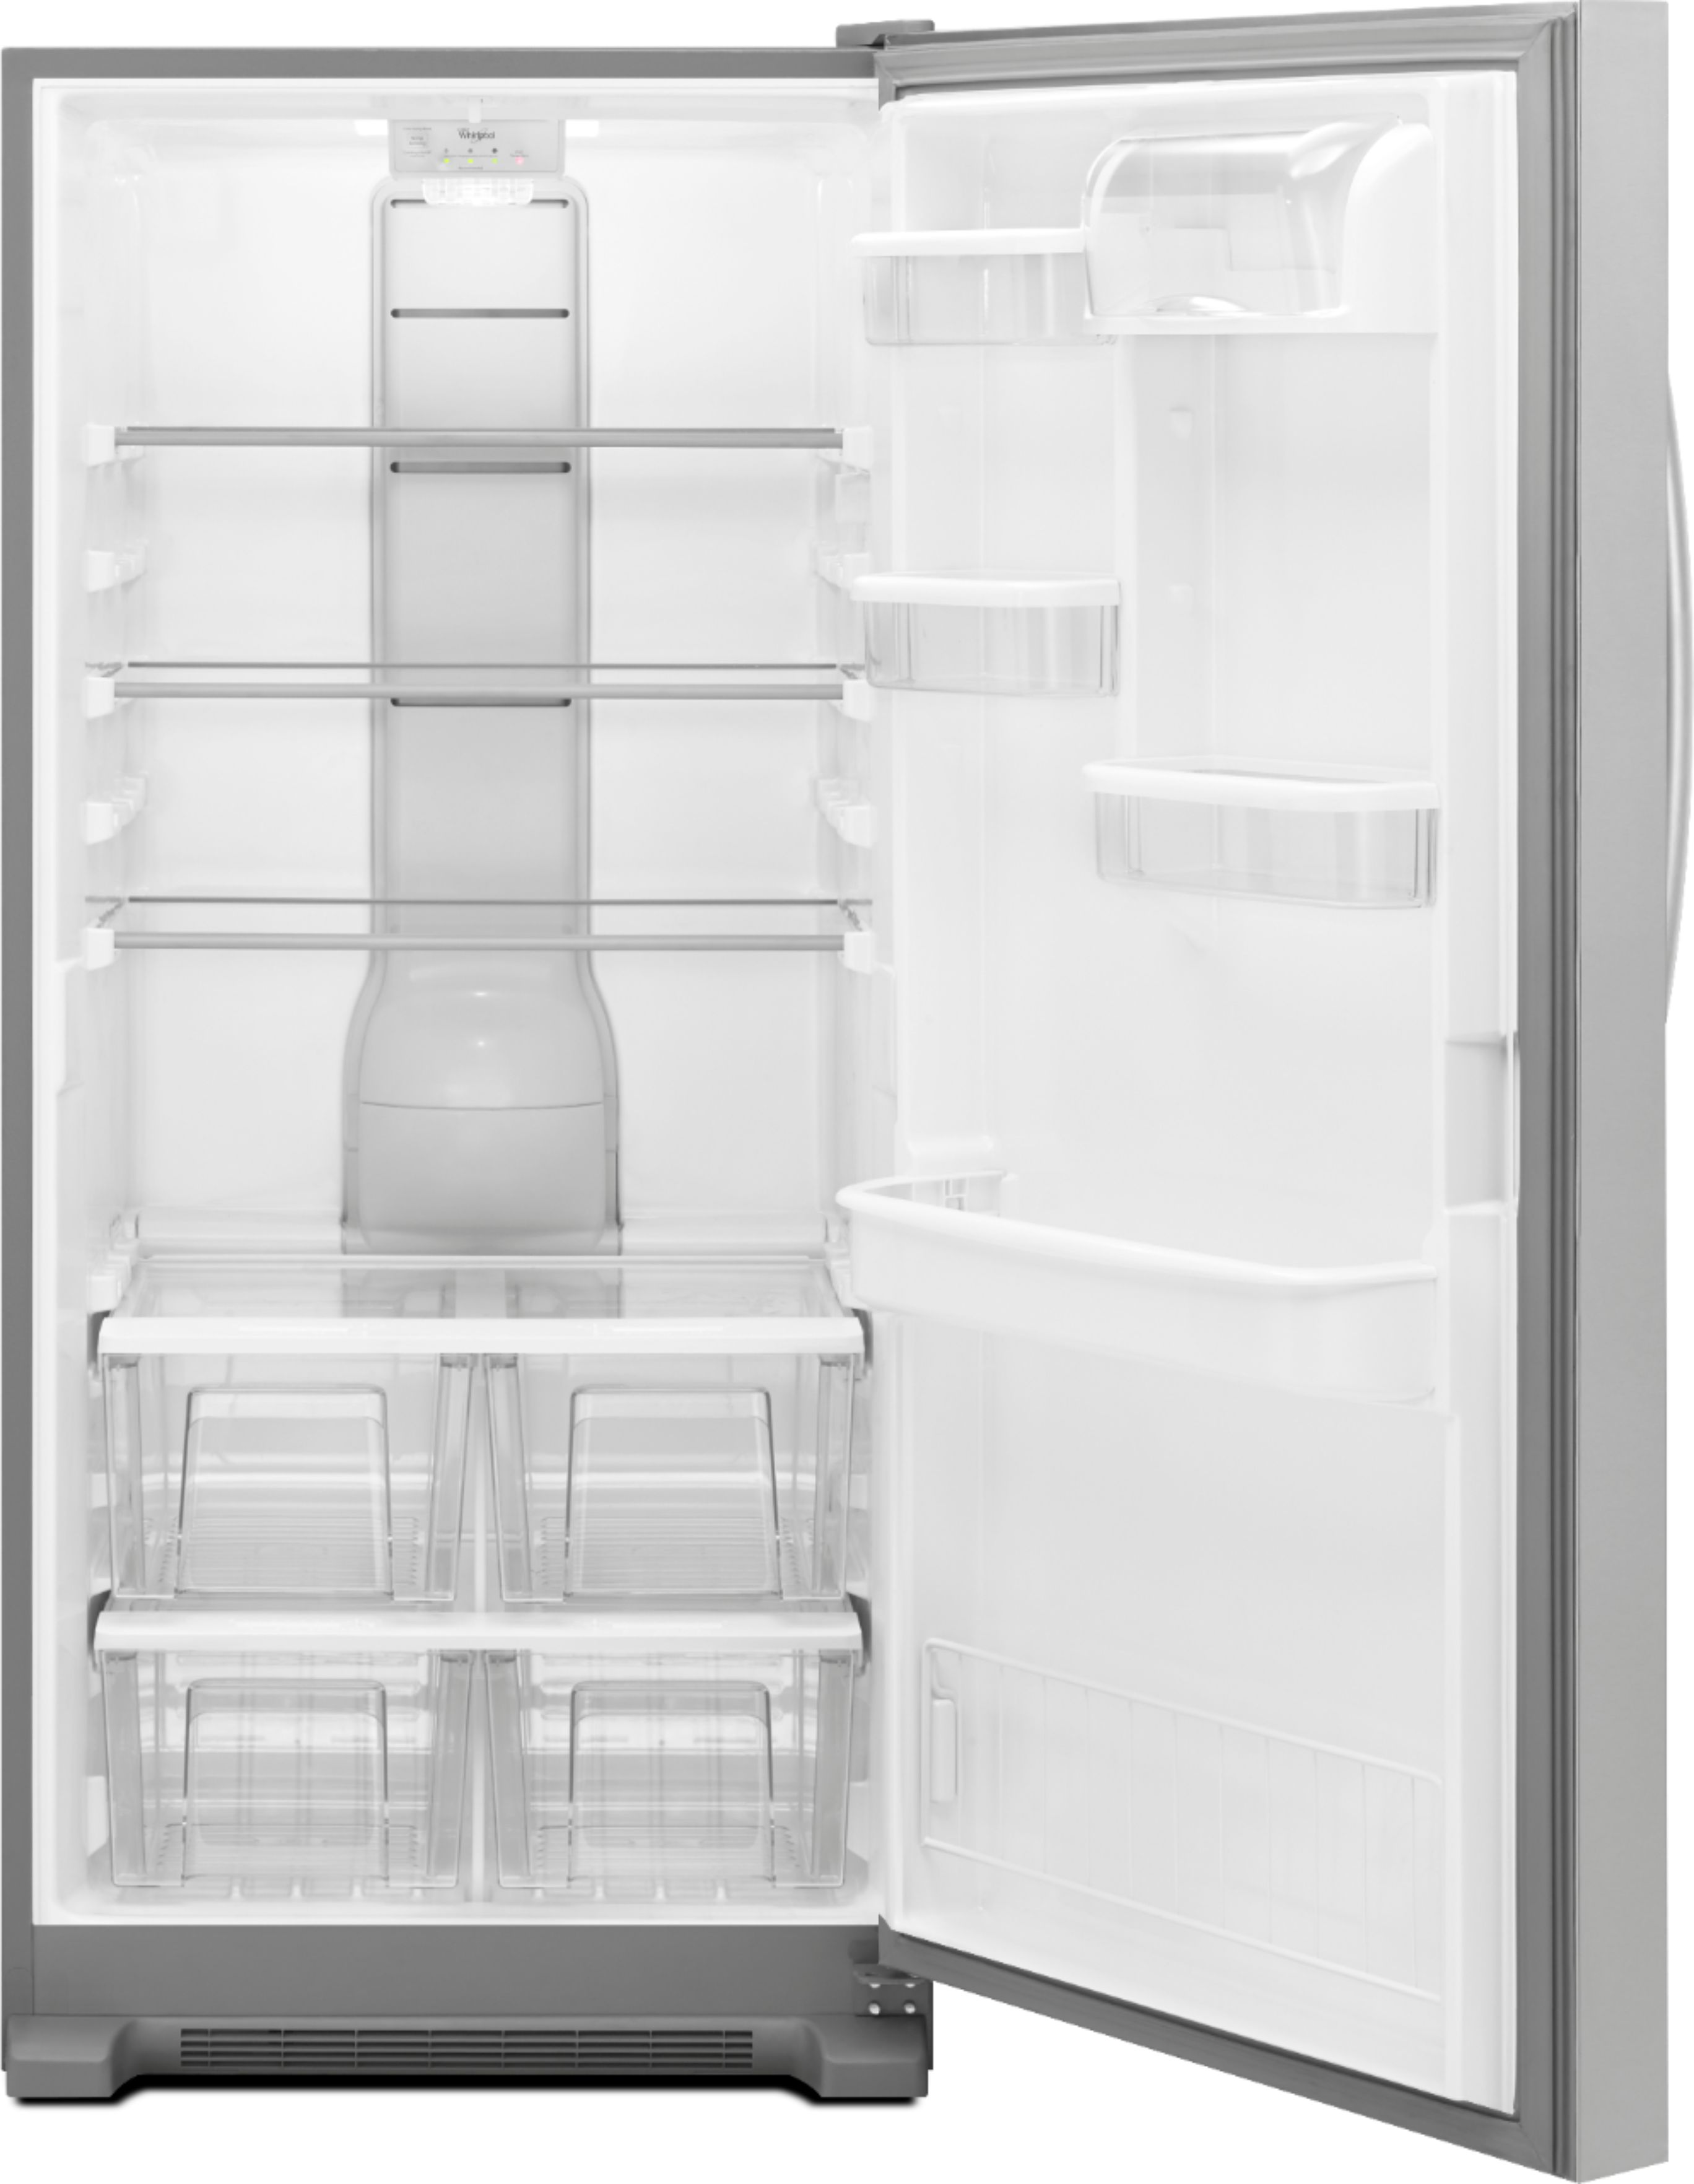 Customer Reviews: Whirlpool SideKicks 17.7 Cu. Ft. Refrigerator Whirlpool 17.7 Cu Ft Top Freezer Refrigerator Monochromatic Stainless Steel